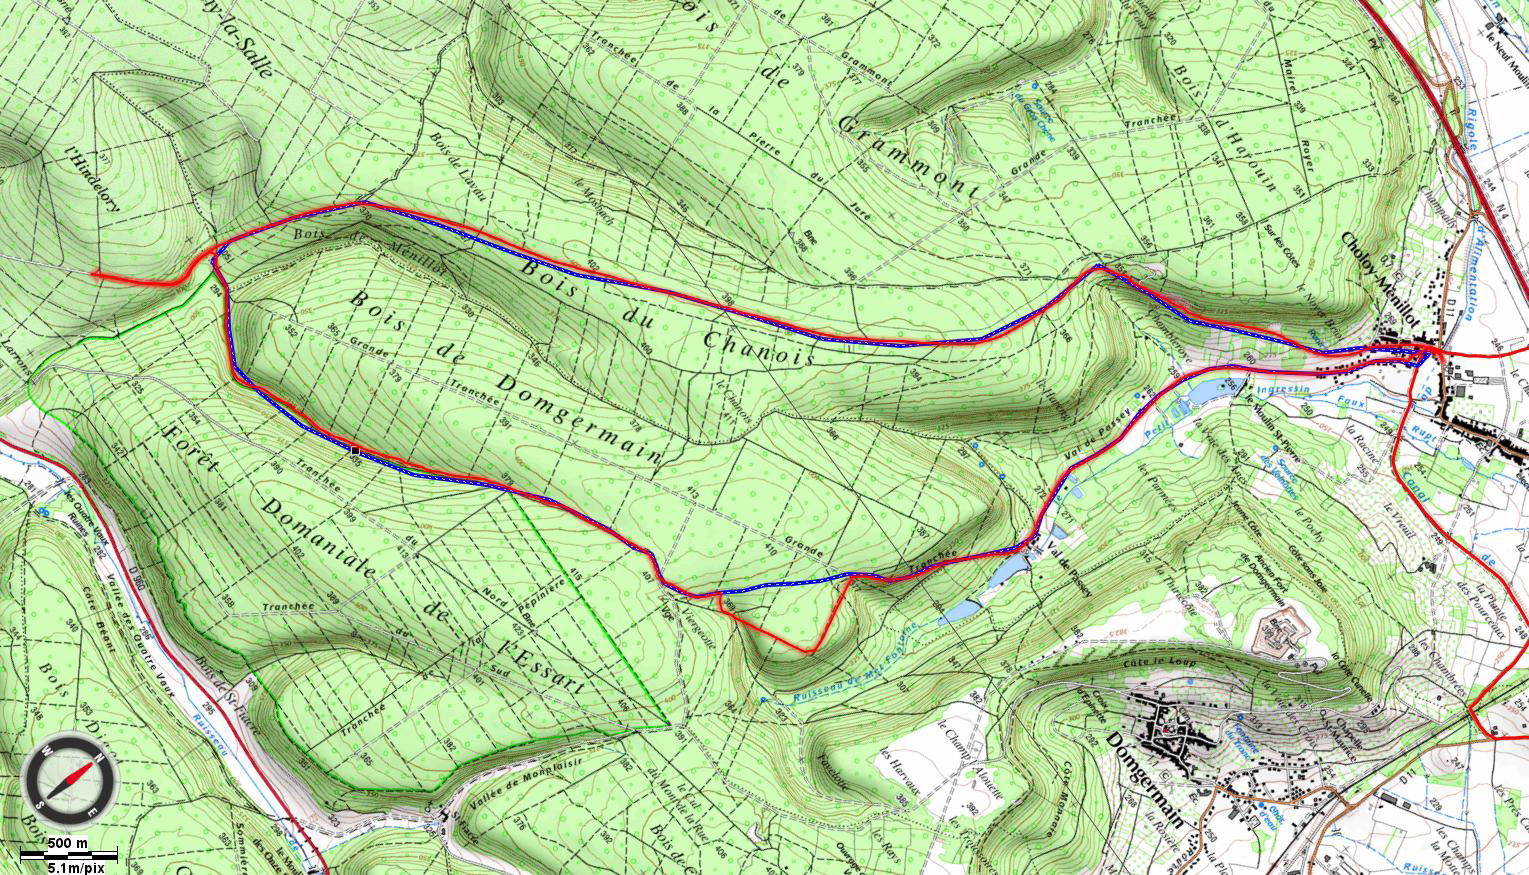 JEANNE D'ARC 2 - 16,41 km